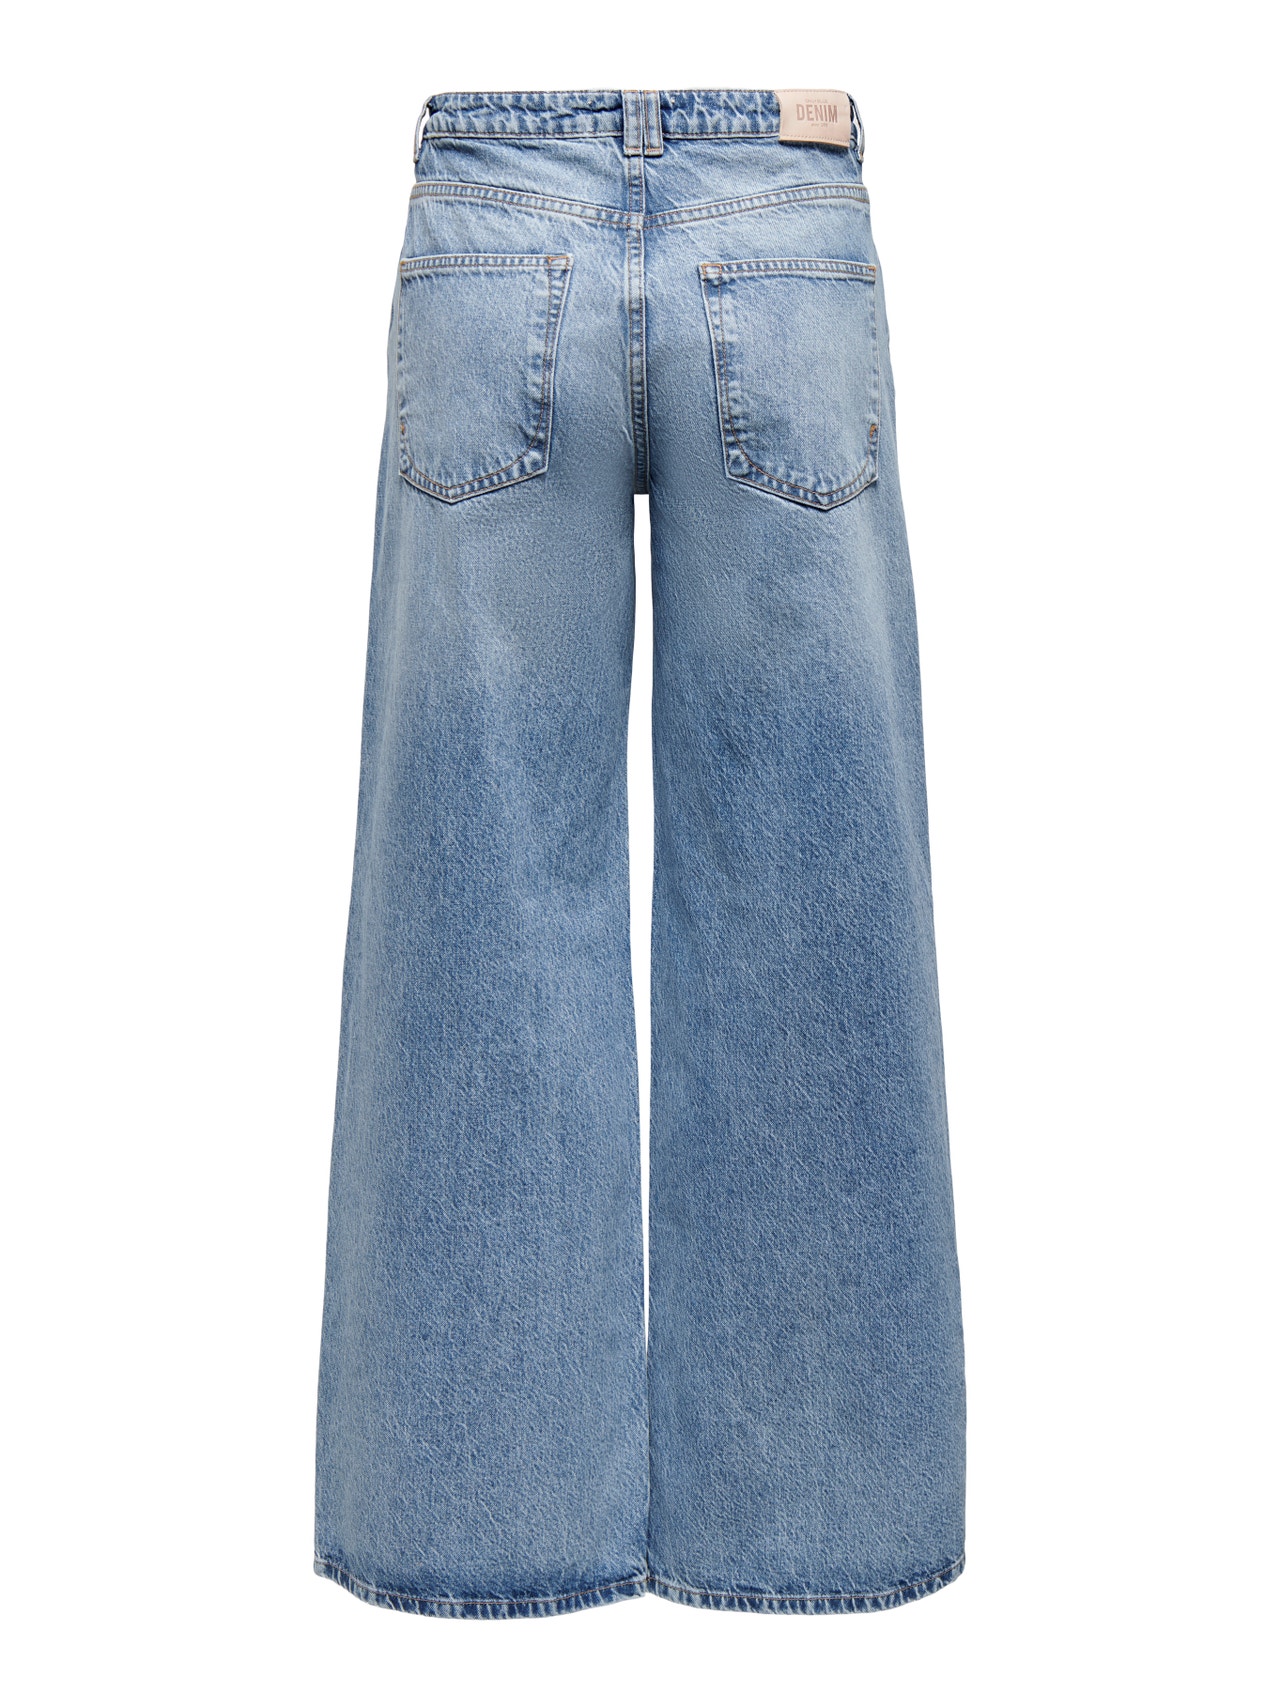 ONLY ONLVela extra wide high waisted jeans -Medium Blue Denim - 15267017